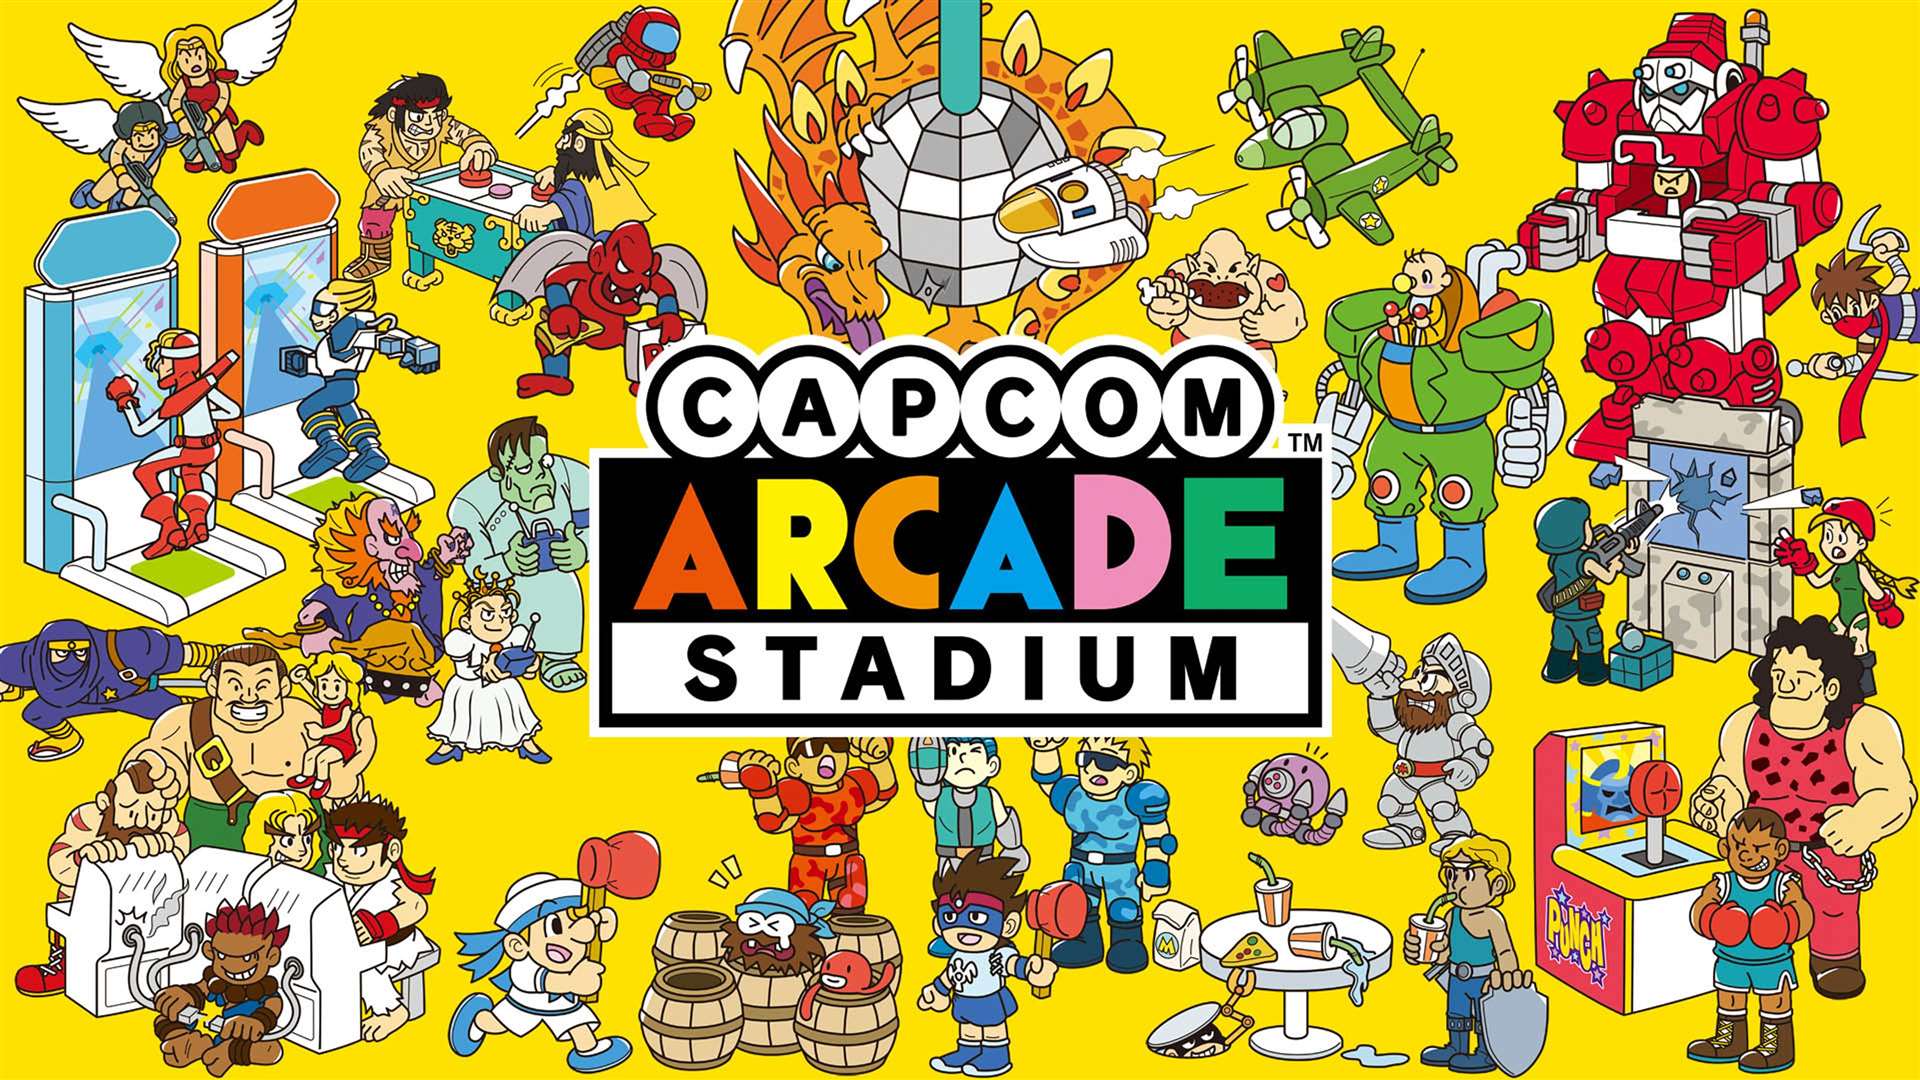 Capcom Arcade Stadium. Picture: PA Photo/Handout